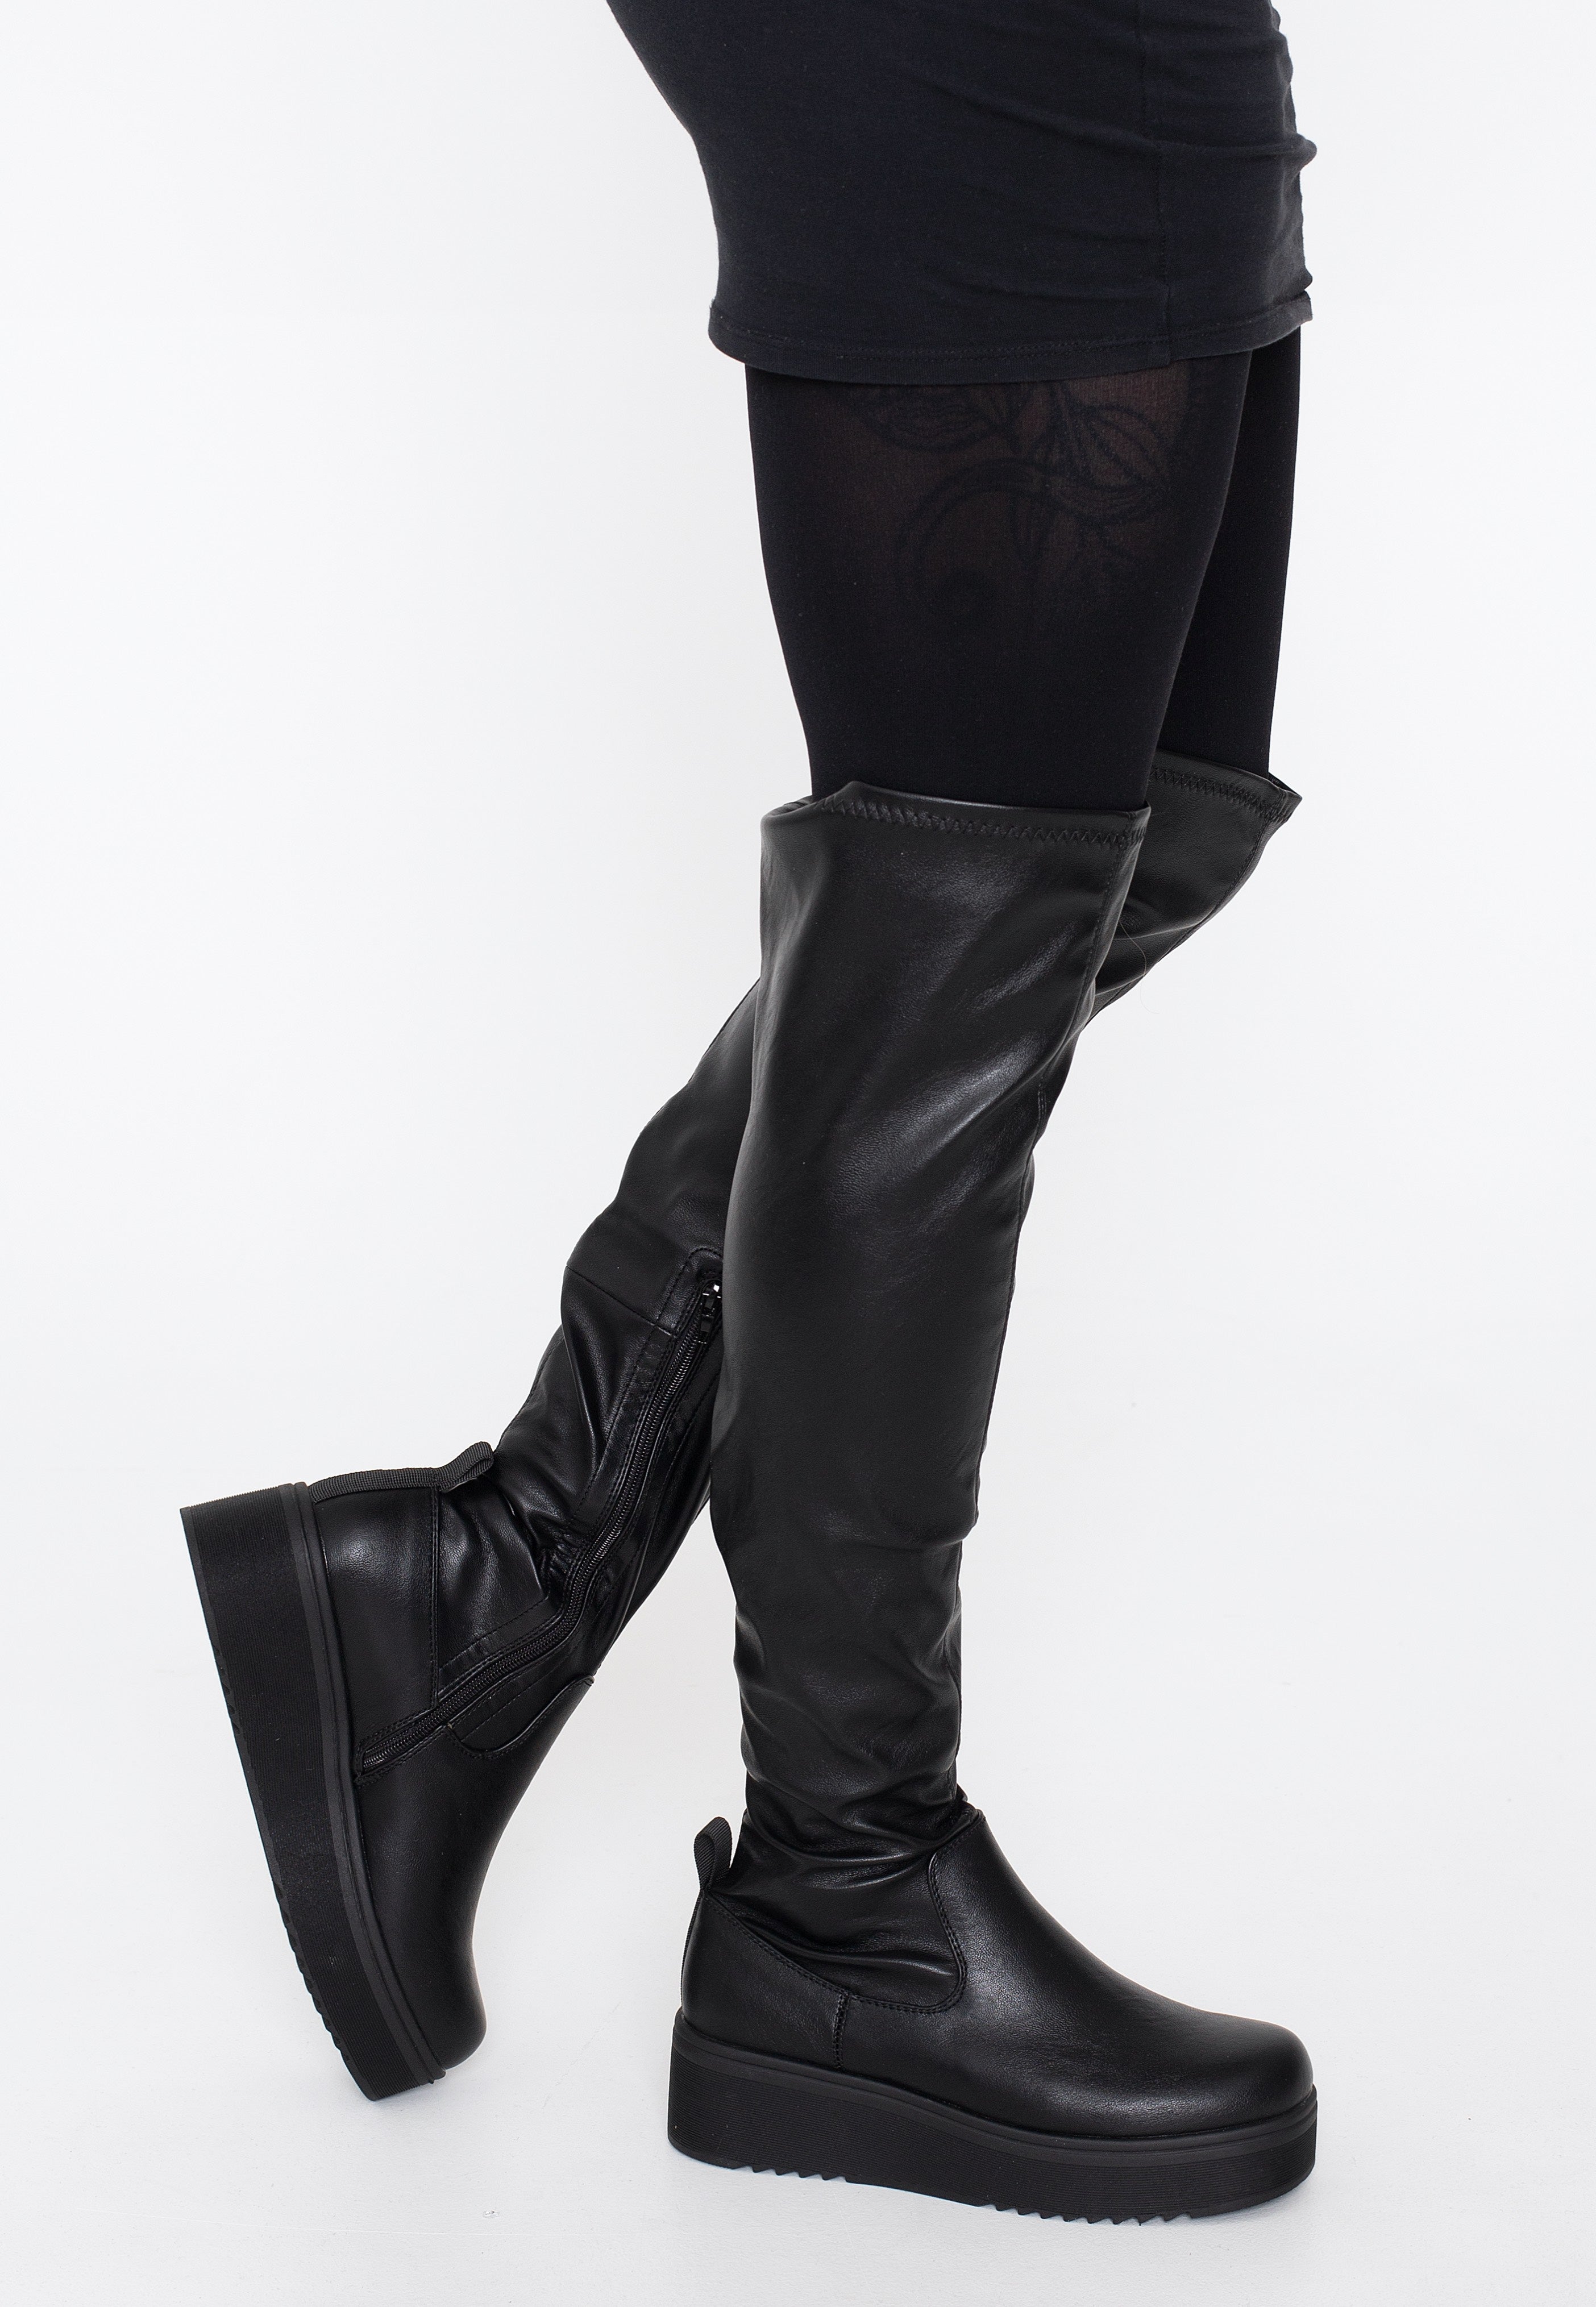 Koi Footwear - Gravity Flatform Over the Knee Black - Girl Shoes